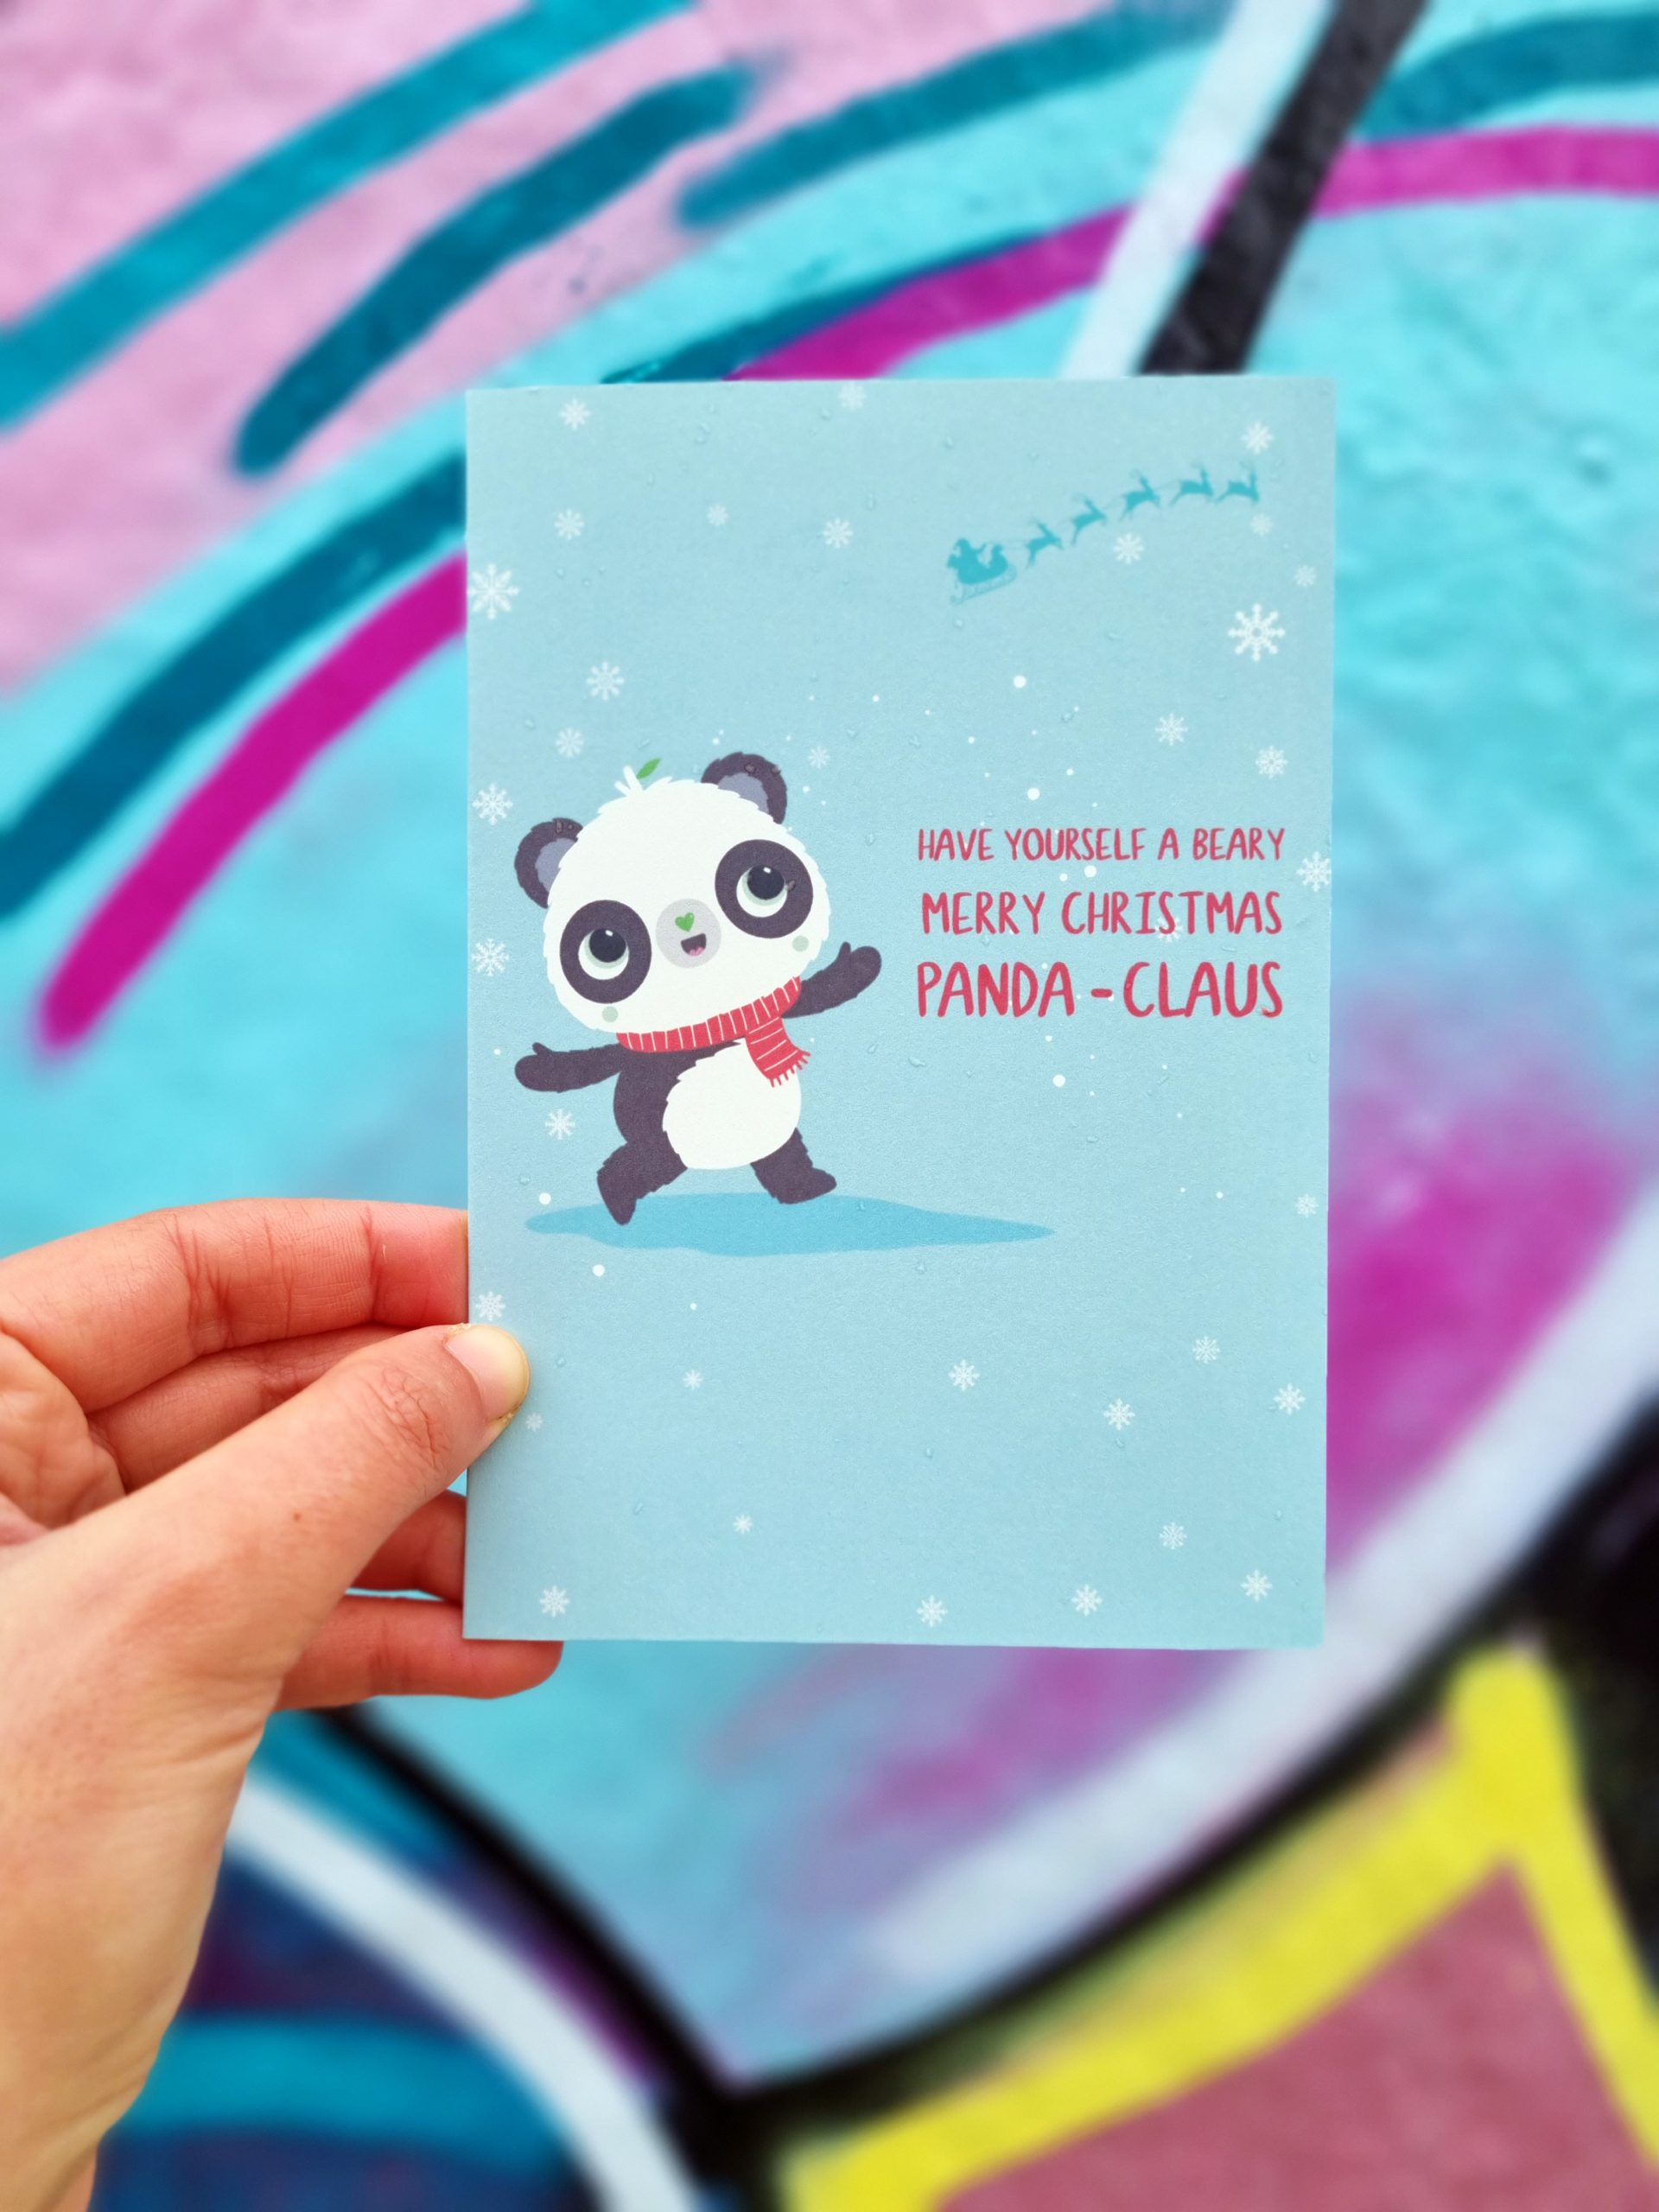 <img src="panda.jpg" alt="panda joy blue eco christmas card"/> 